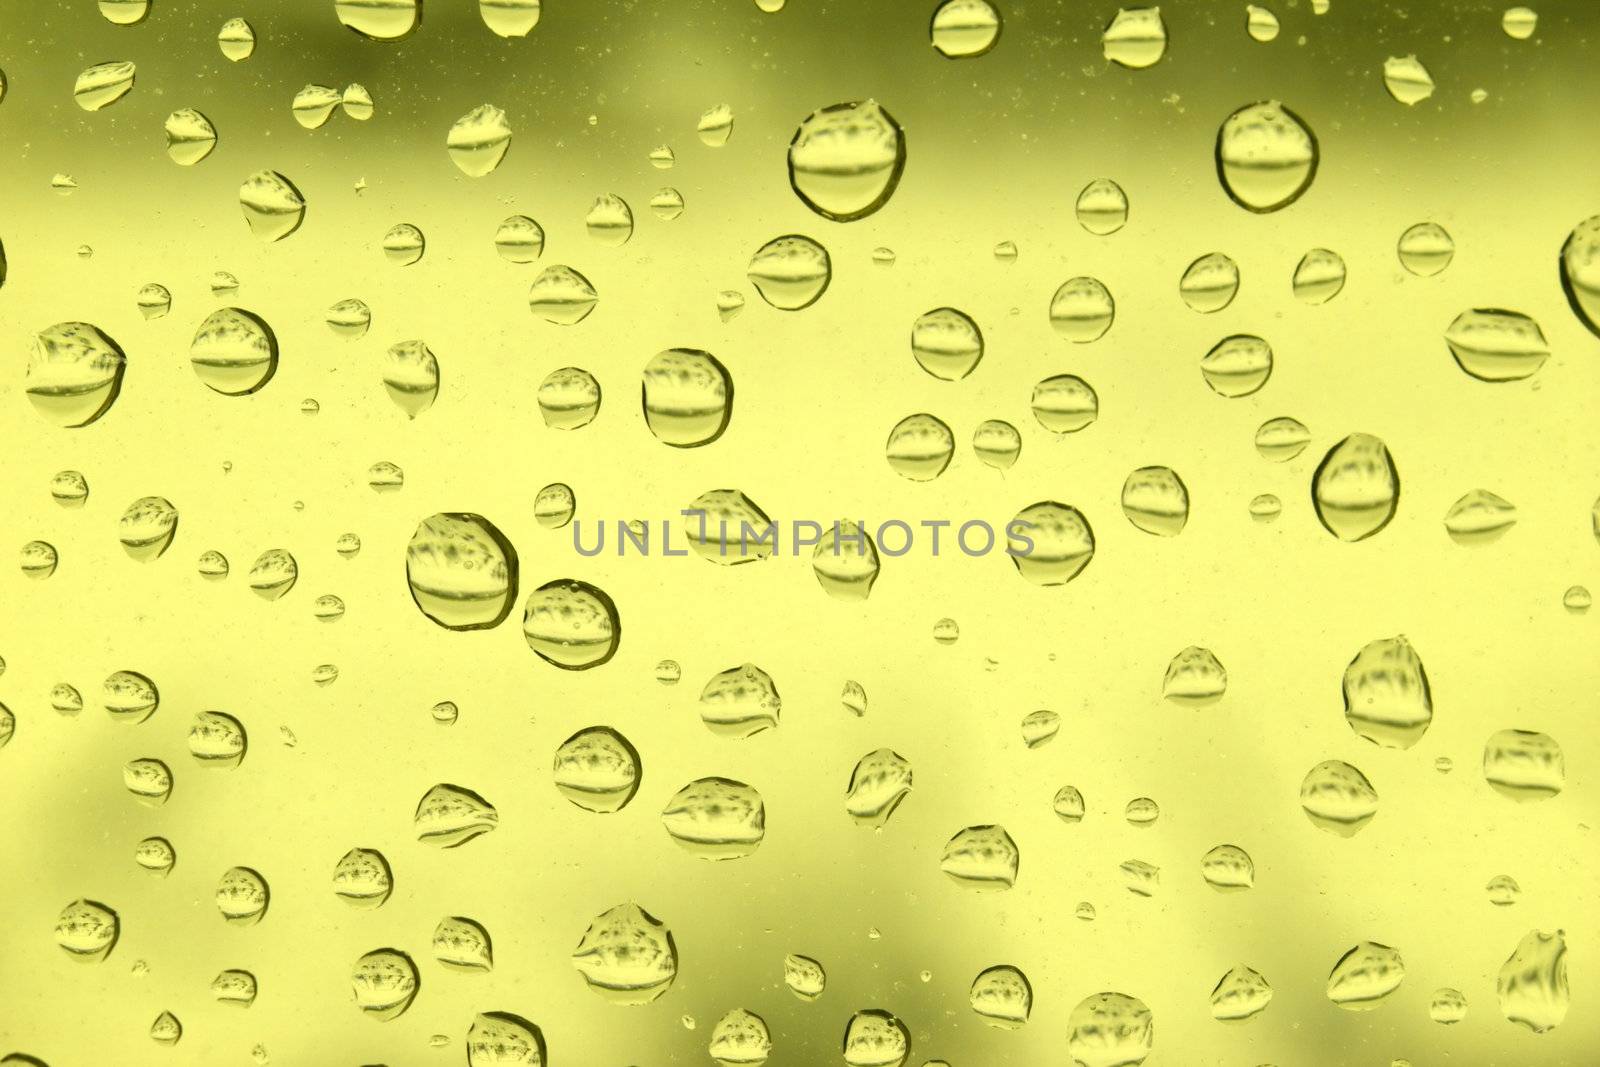 rain drops on glass by Mikko